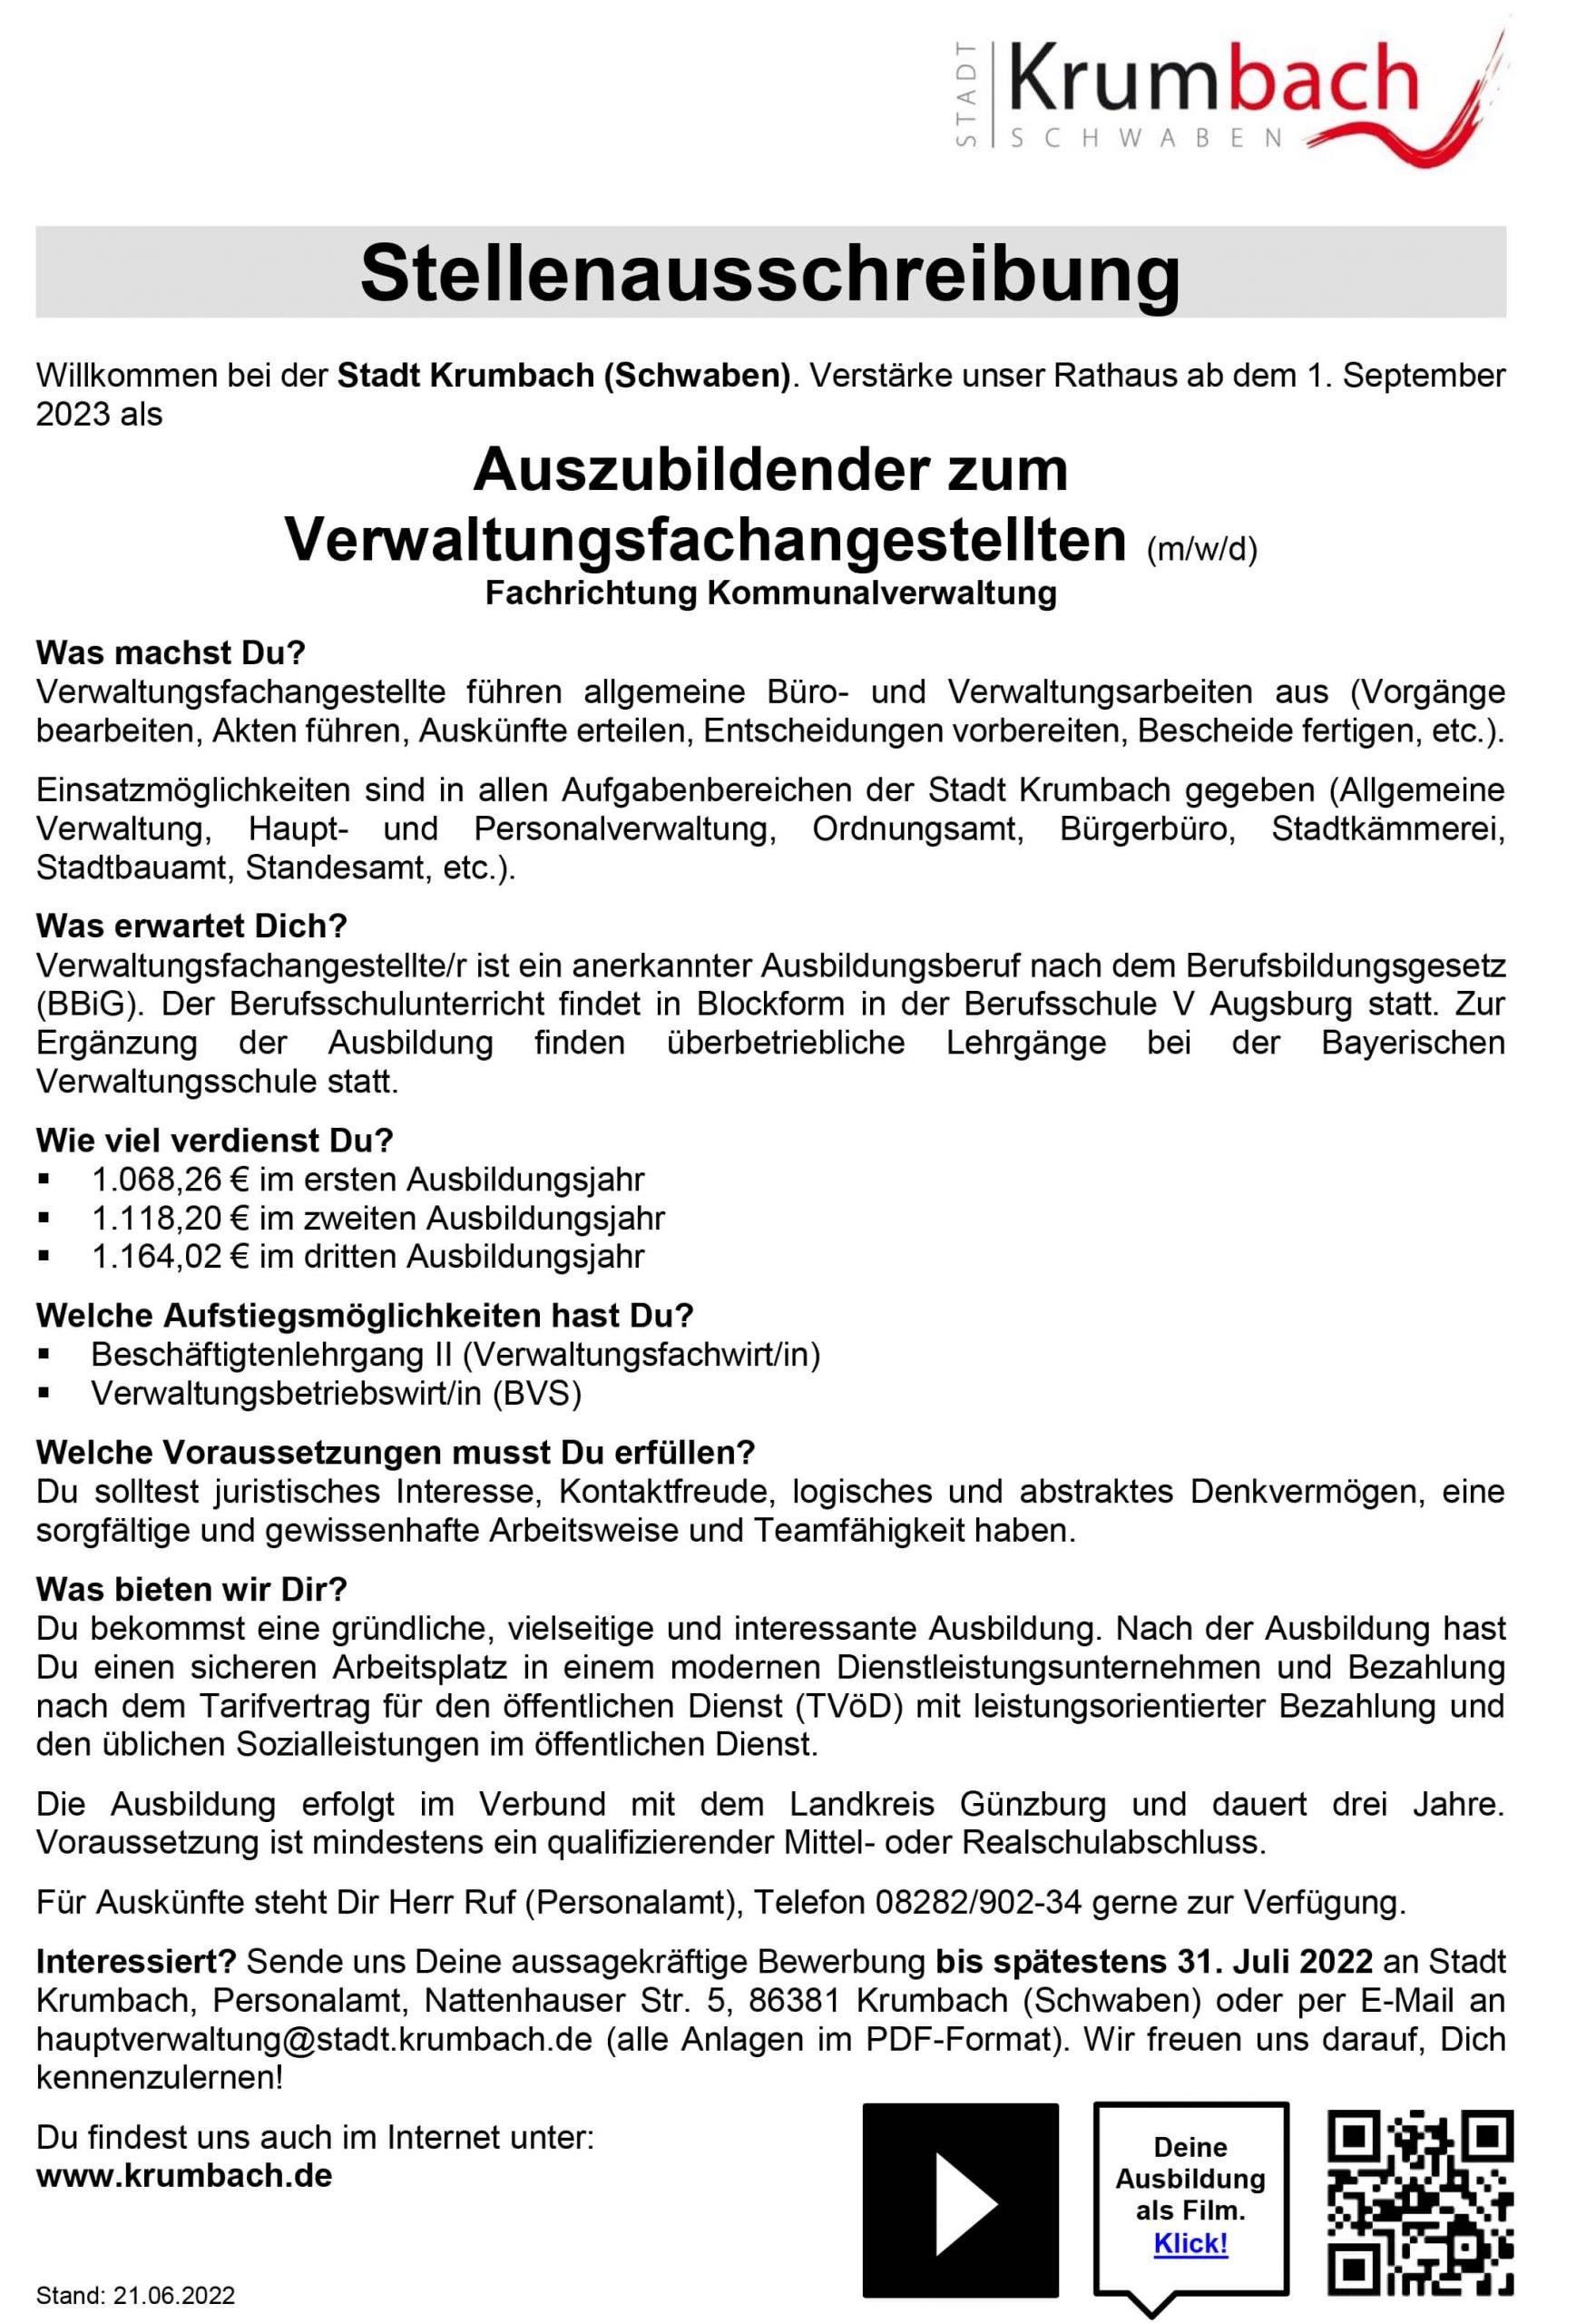 Stellenausschreibung-Azubi-VFA-K-2022